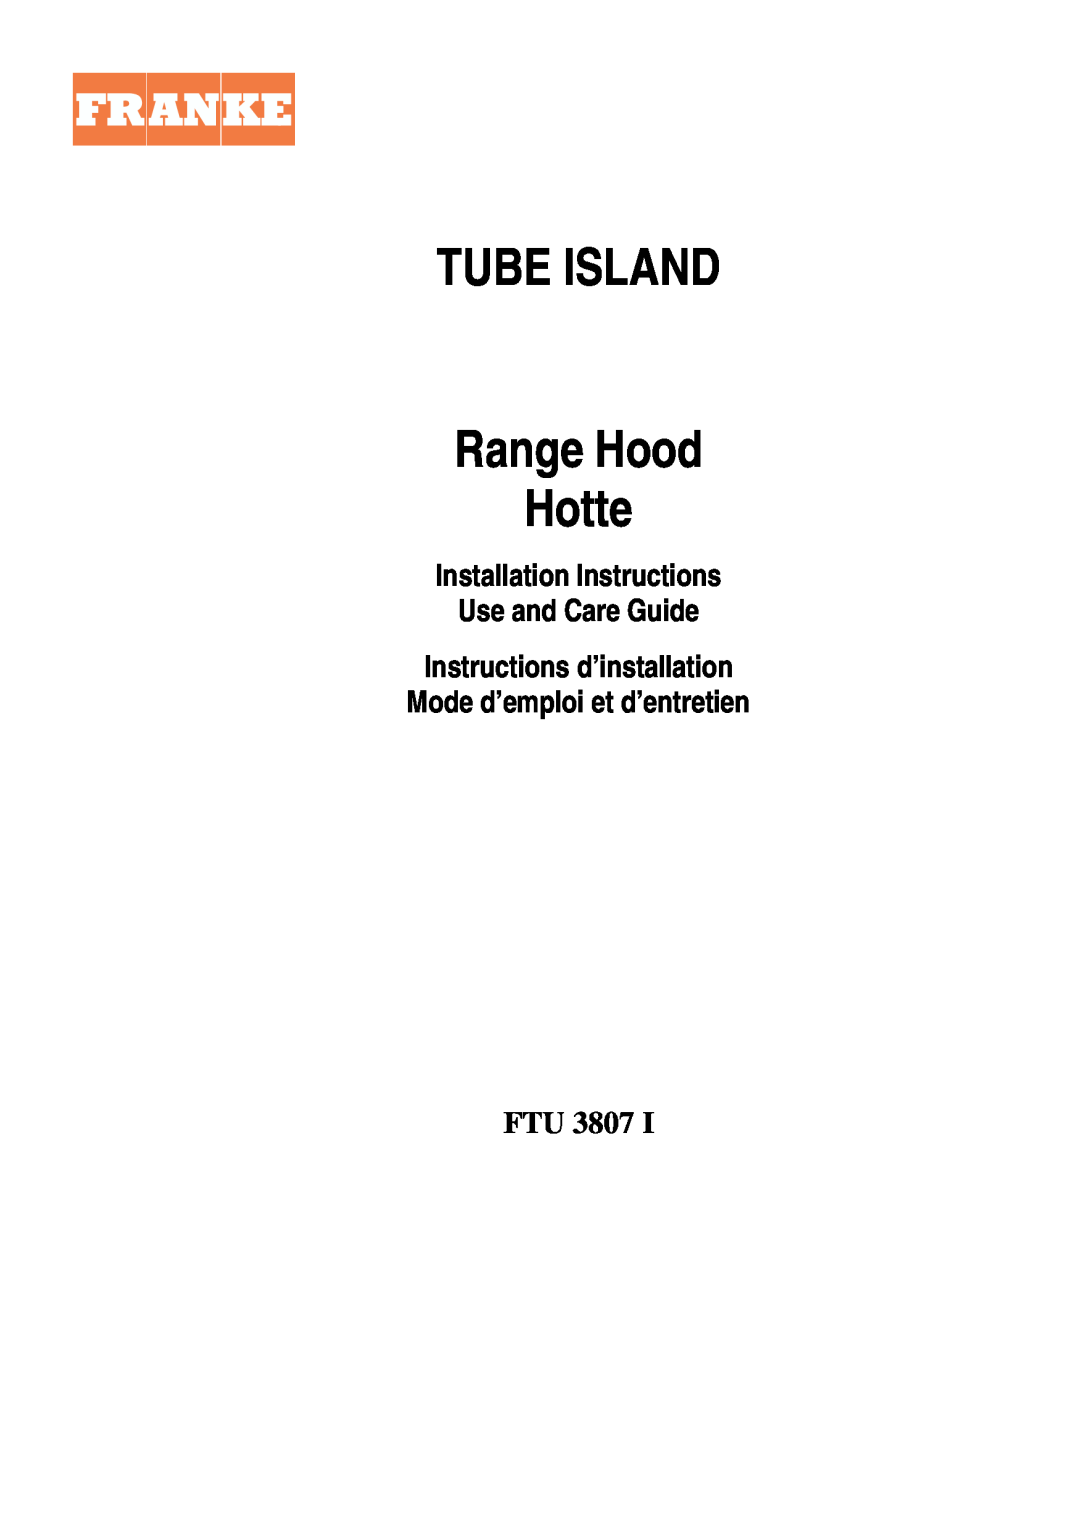 Franke Consumer Products FTU 3807 I installation instructions TUBE ISLAND Range Hood Hotte, Ftu 